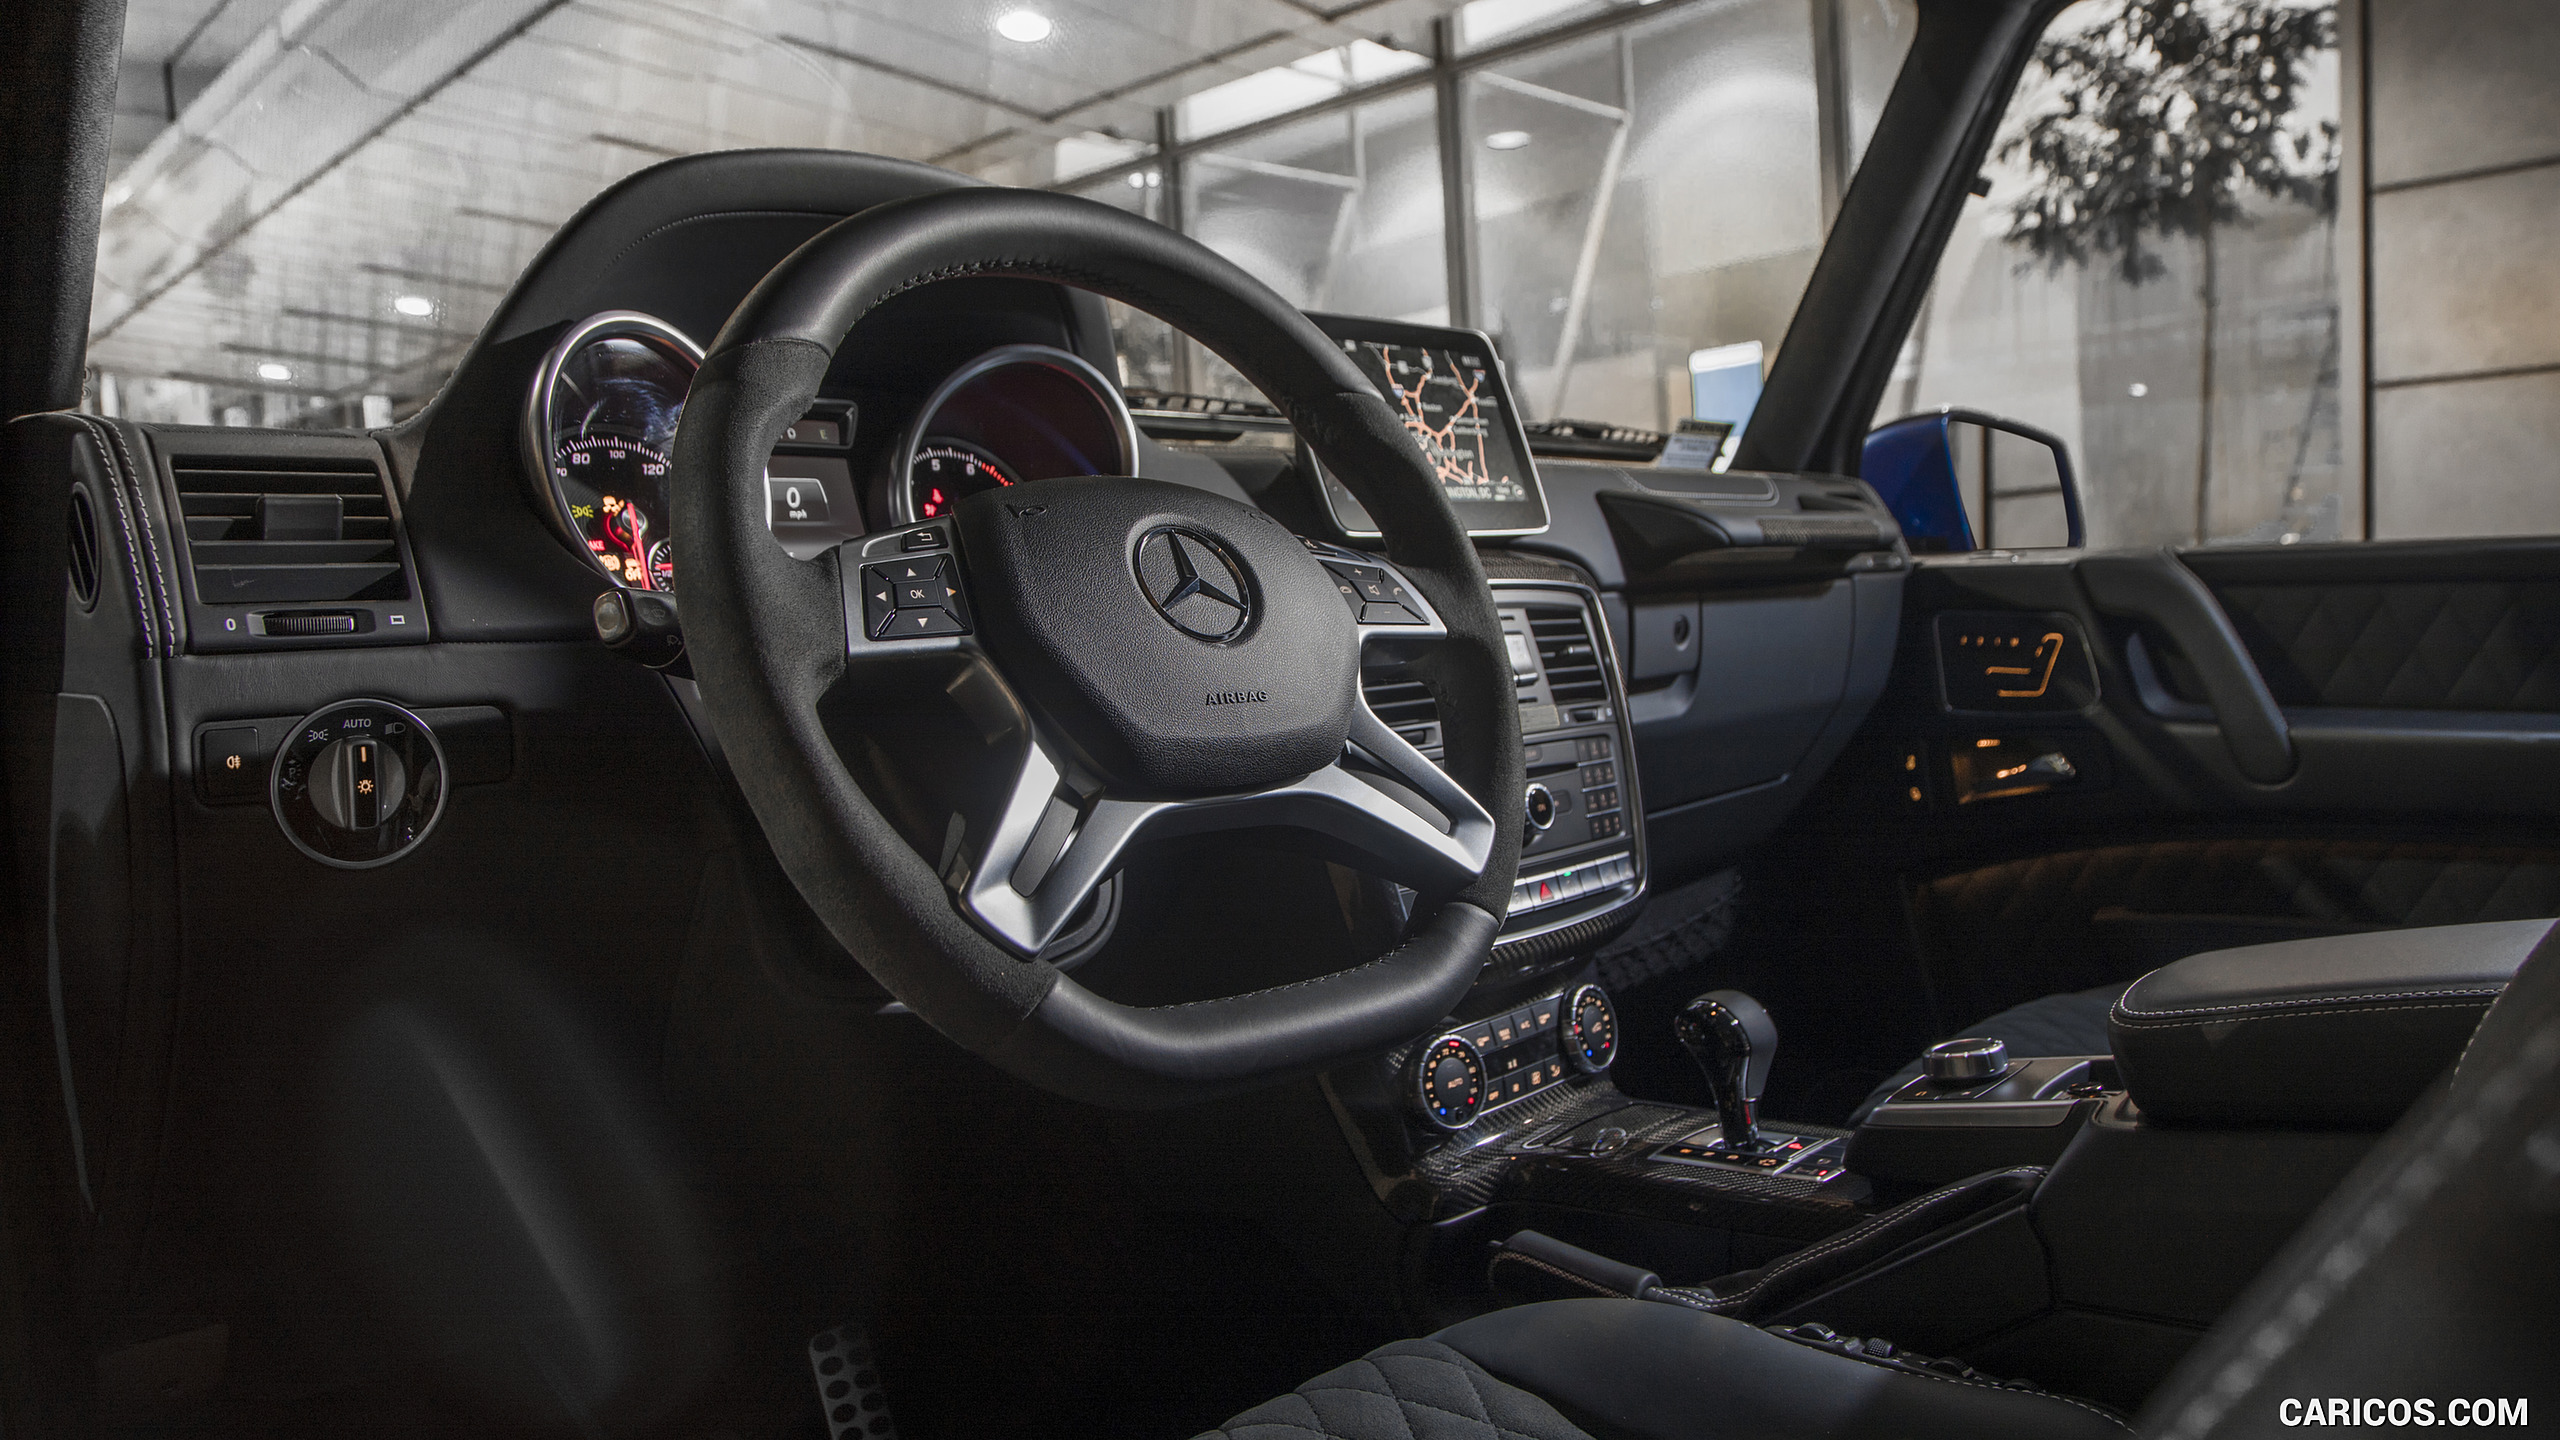 2017 Mercedes-Benz G550 4x4² (US-Spec) - Interior, #38 of 45